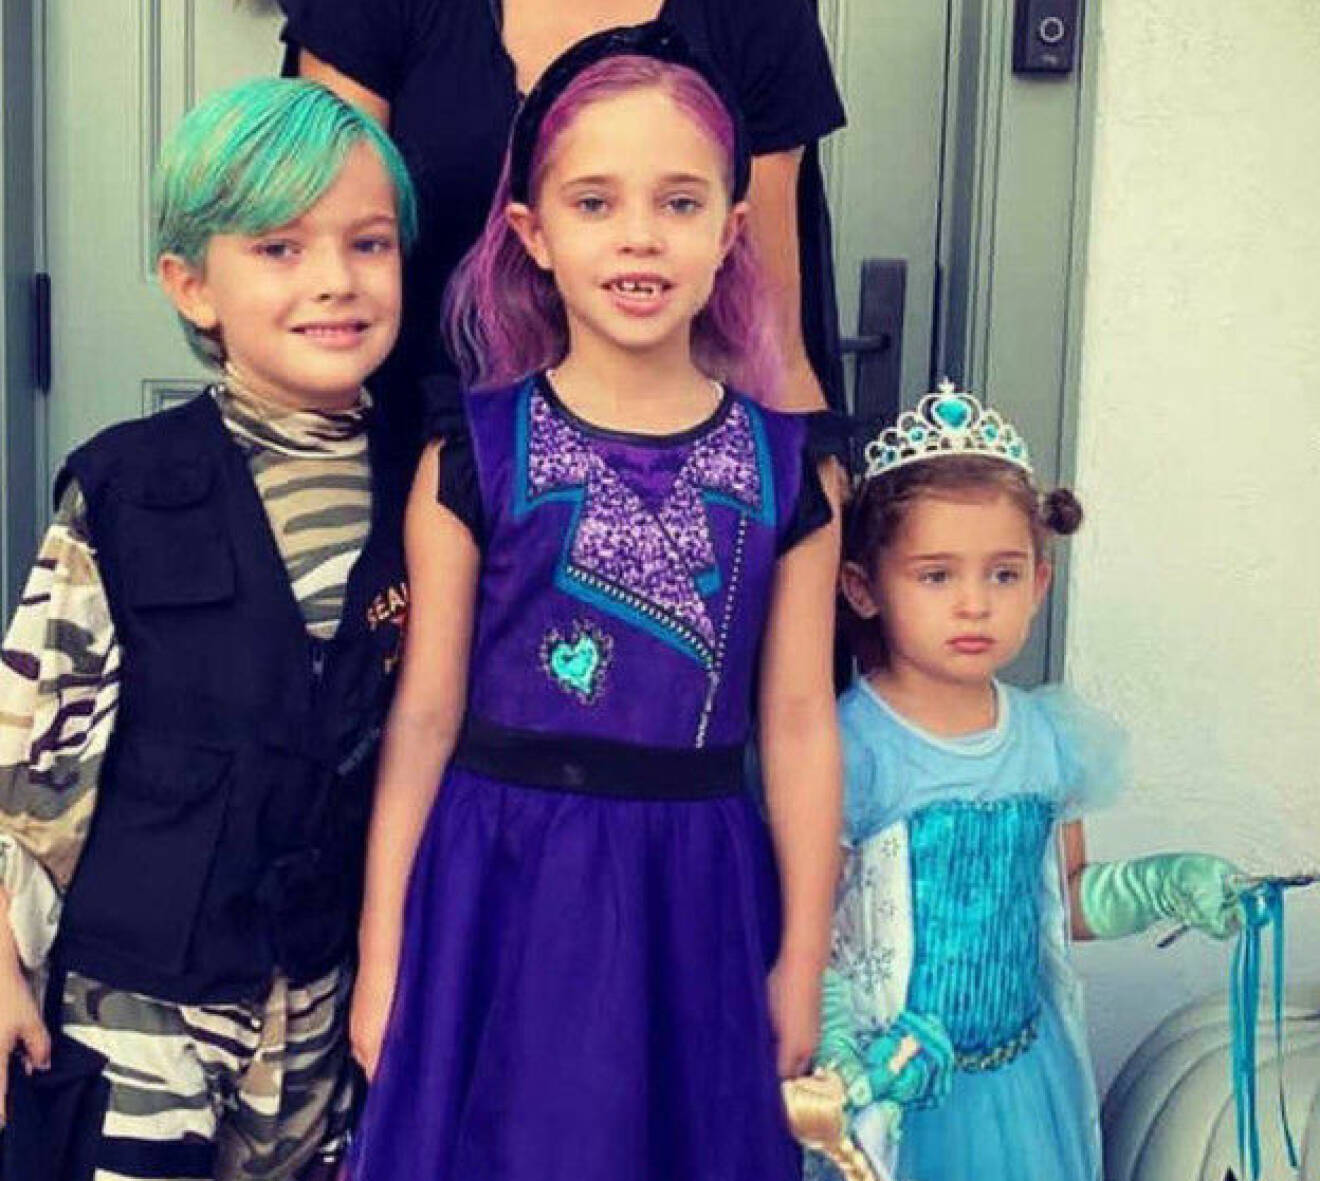 Prinsessan Madeleines barn prins Nicolas prinsessan Leonore prinsessan Adrienne Halloween 2020